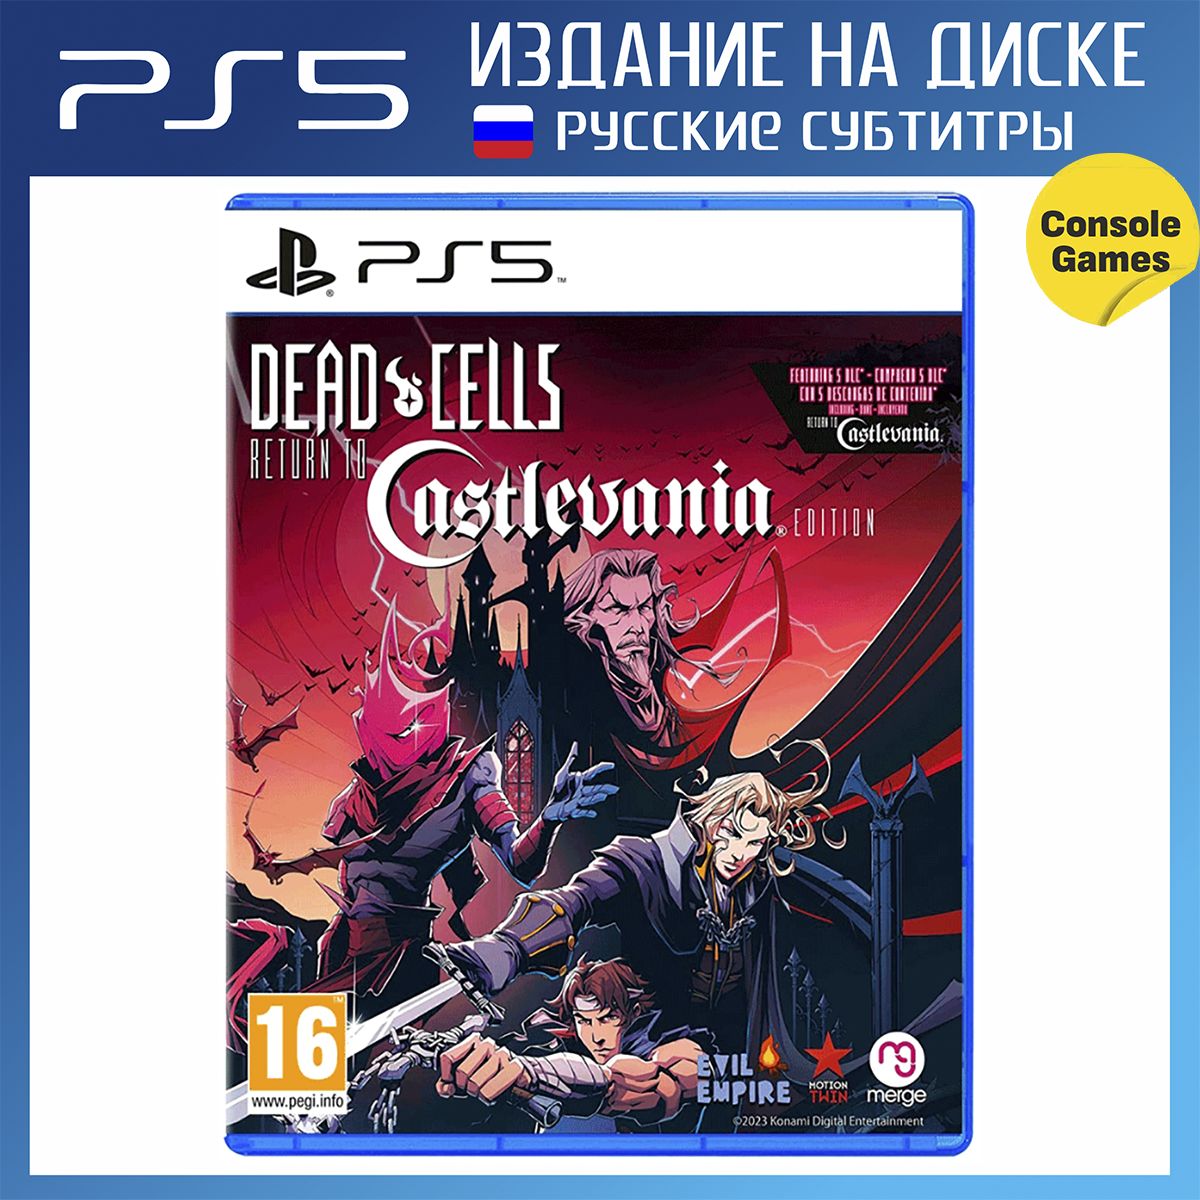 Dead Cells: Return to Castlevania Edition. Dead Cells Return to Castlevania.